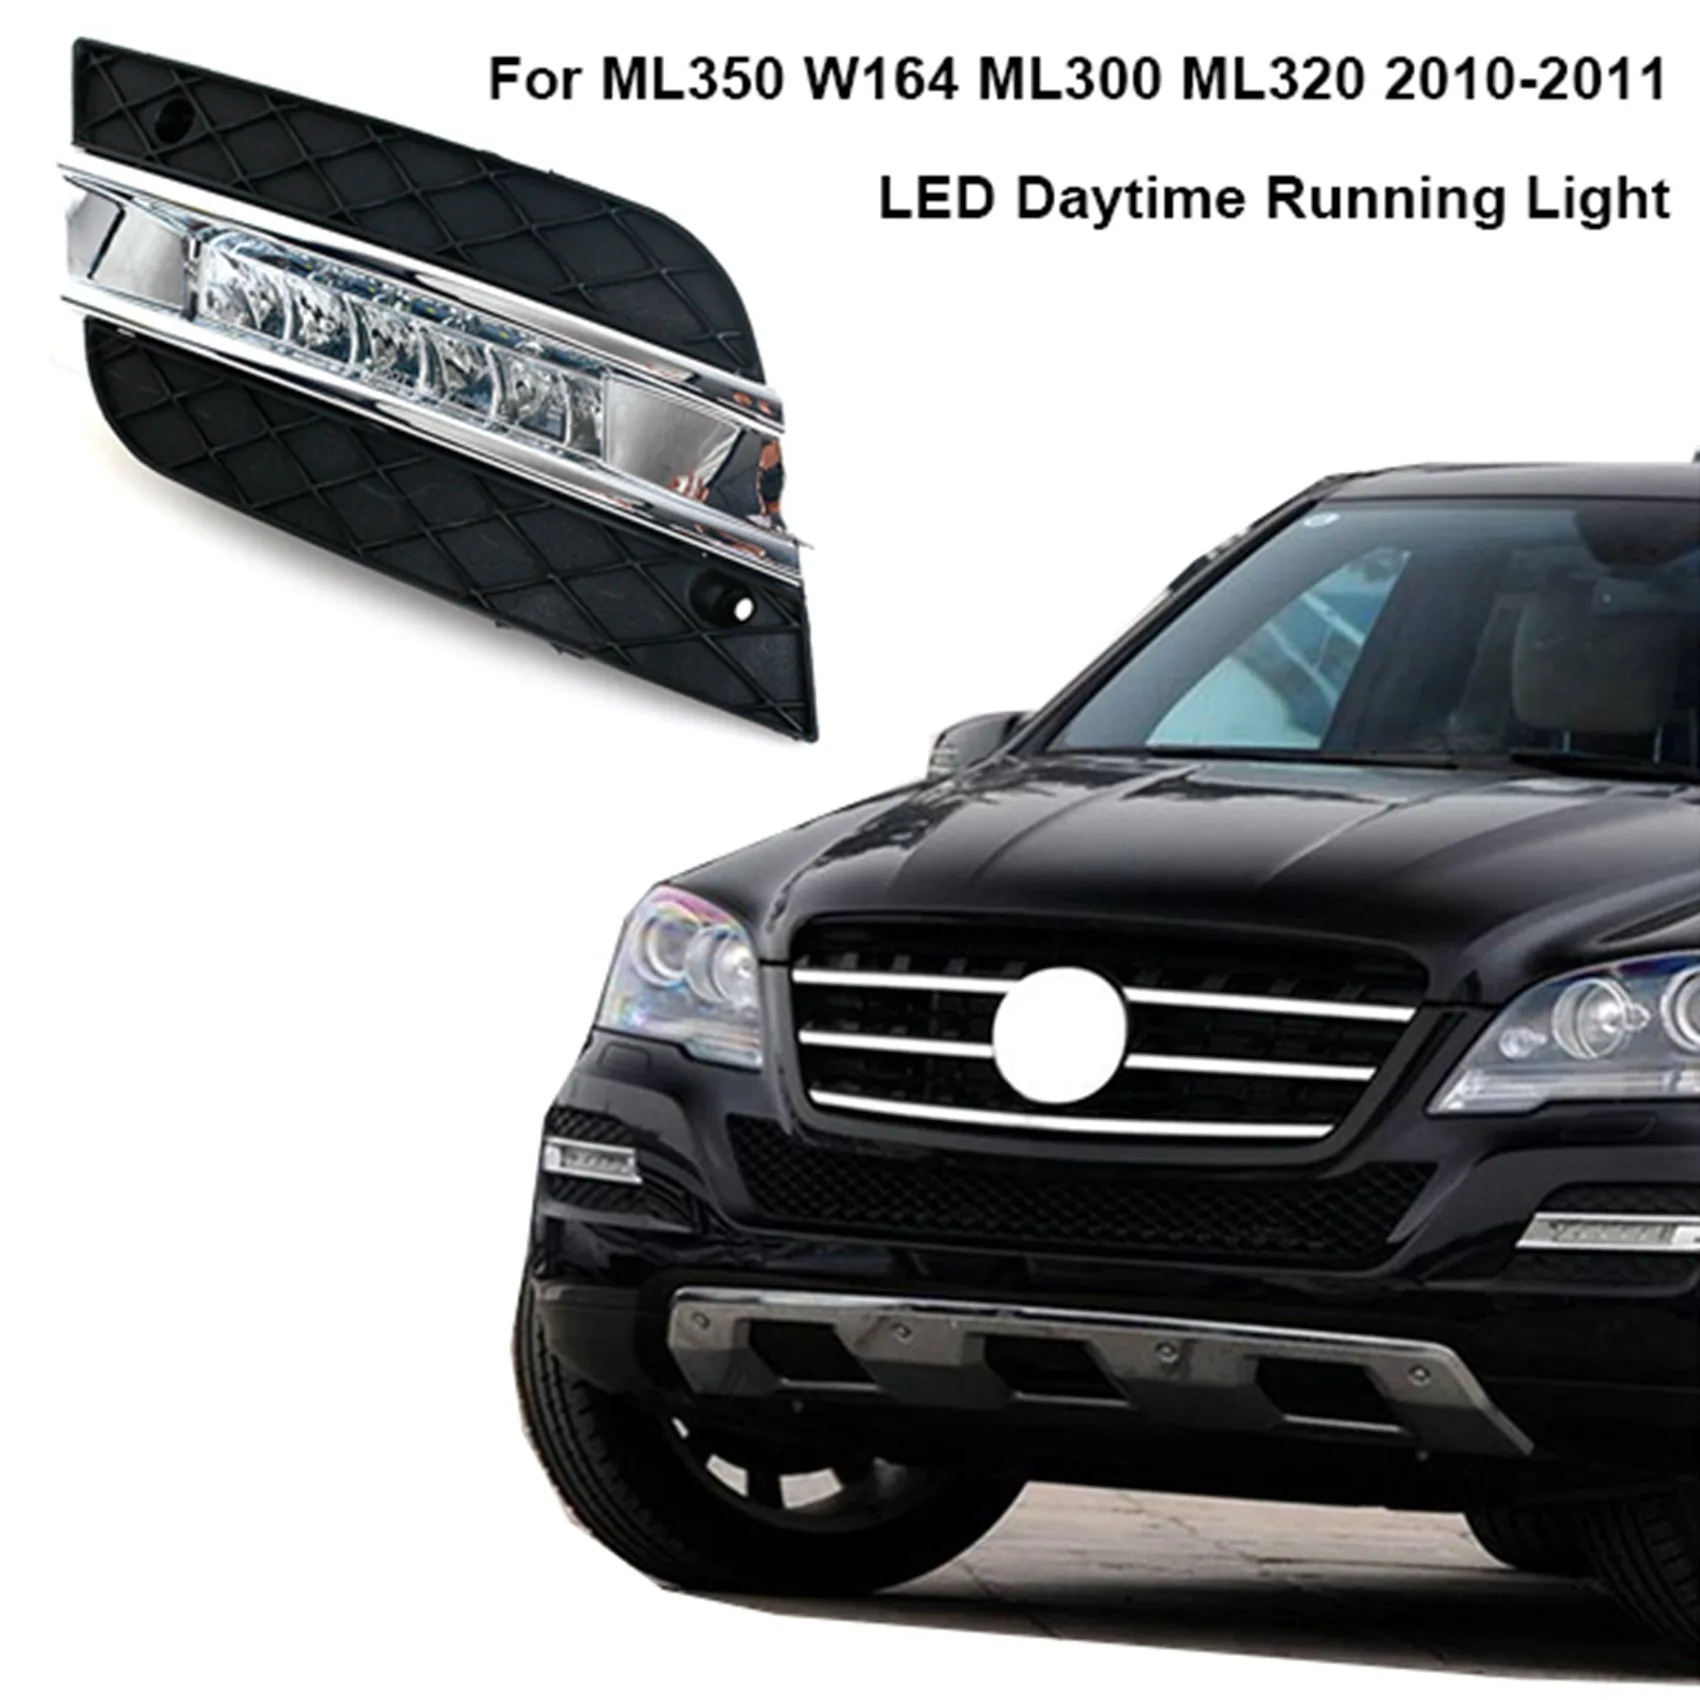 

Задняя противотуманная фара для Mercedes Benz ML350 W164 ML300 ML320 2010-2011